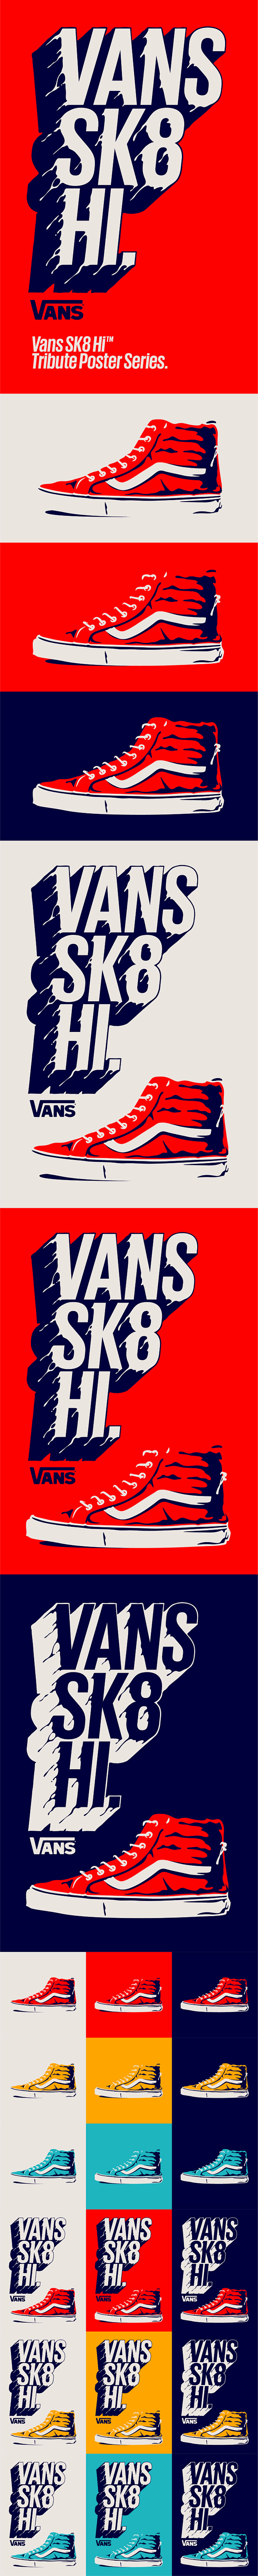 Vans SK8 Hi™ Tribute...